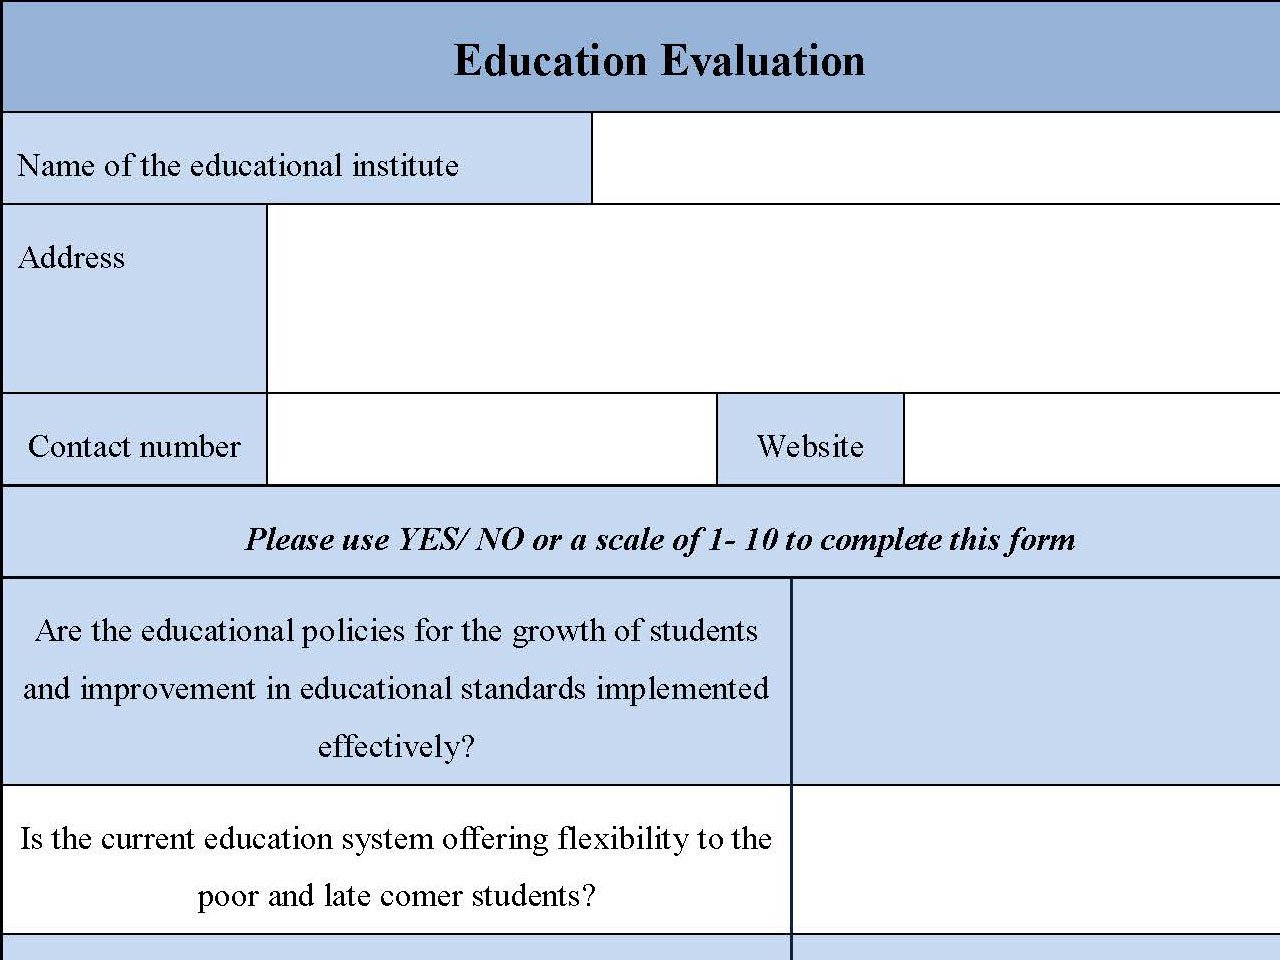 Education Evaluation Form